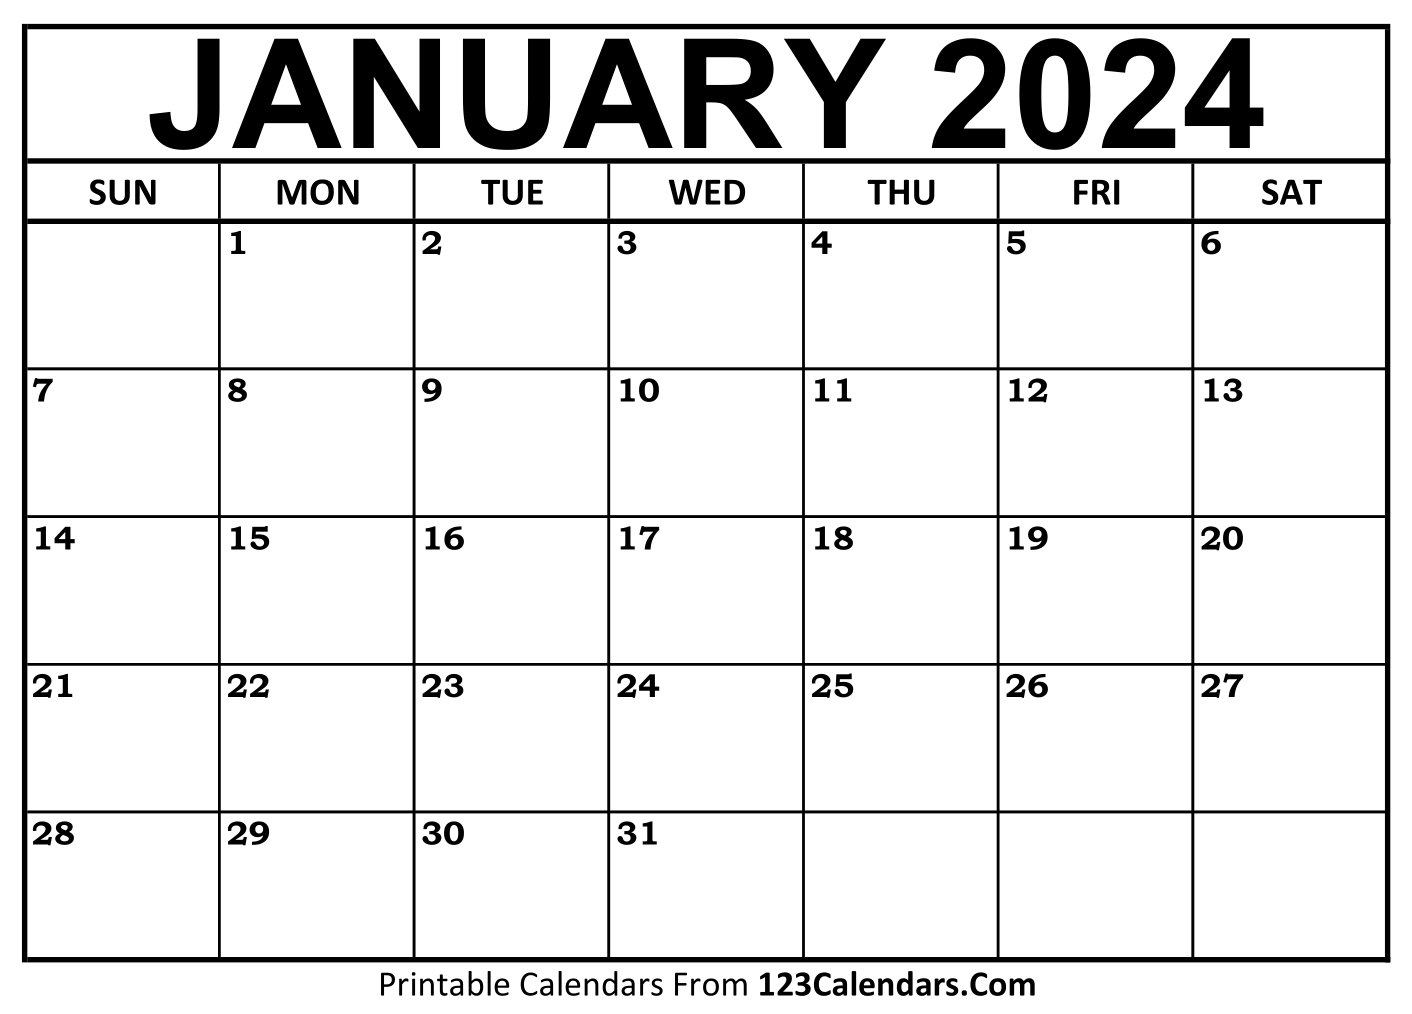 Printable January 2024 Calendar Templates - 123Calendars | Year 2024 January Calendar